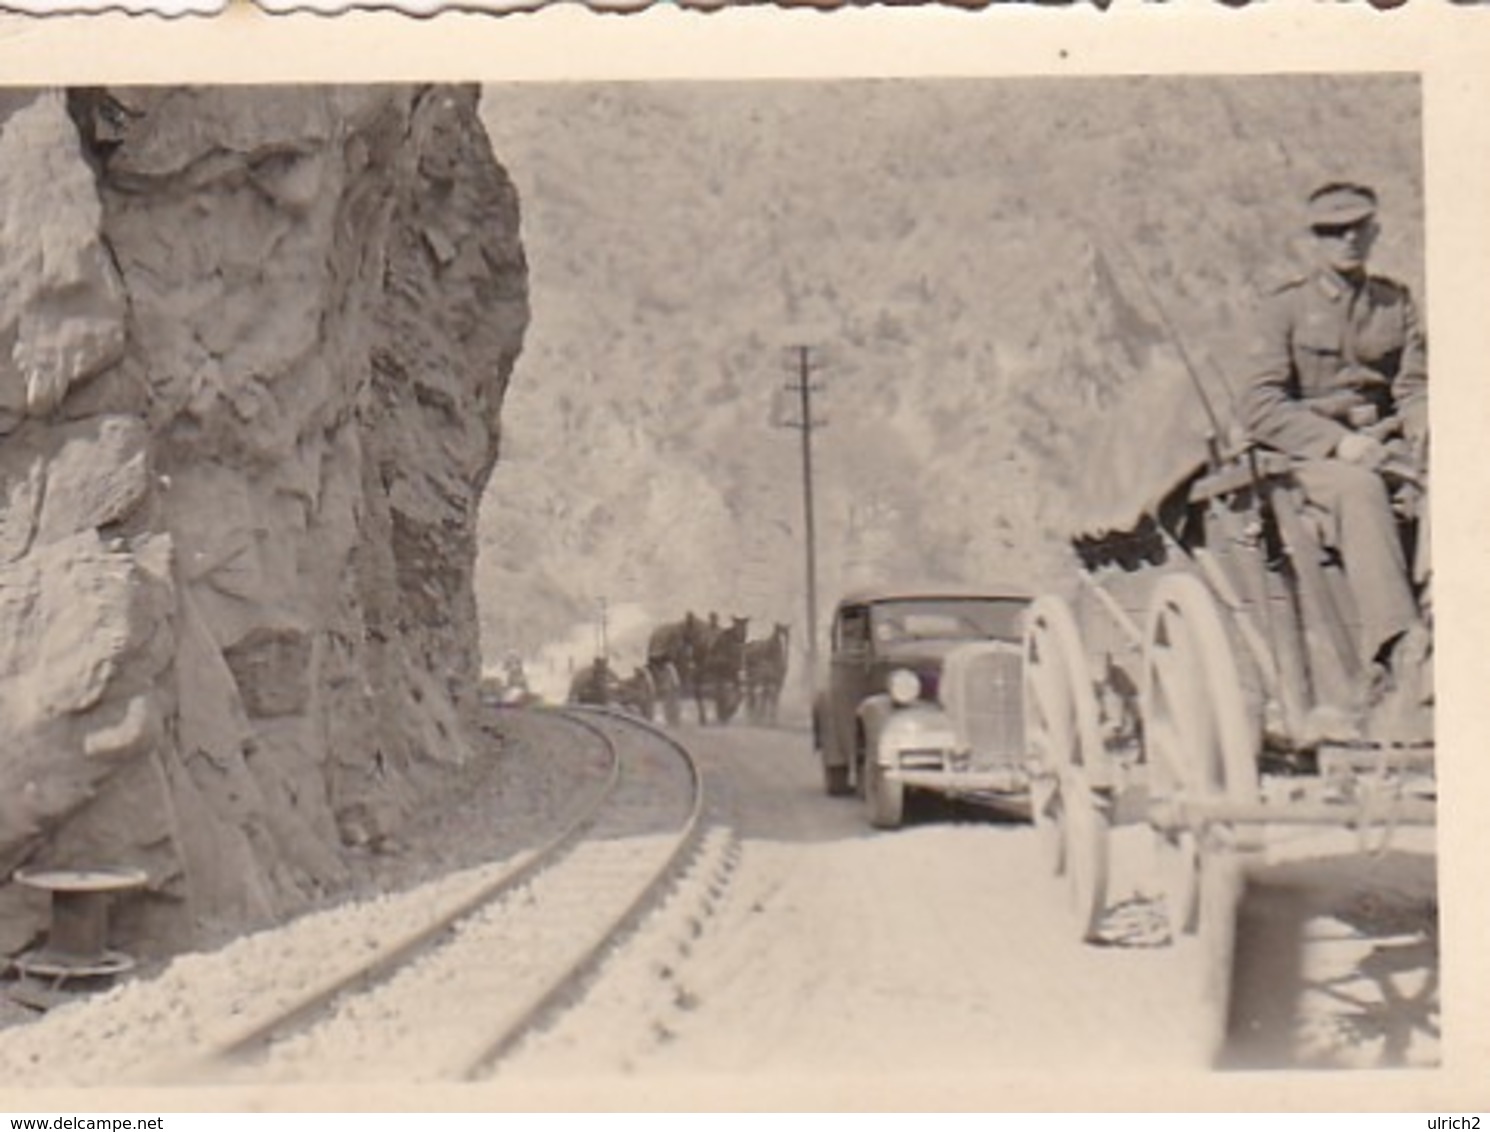 Foto Deutsche Kolonne - Kresnapass - Kresna Gorge Bulgaria - Pioniere IR 46 - 2. WK - 8*5,5cm (43458) - Krieg, Militär